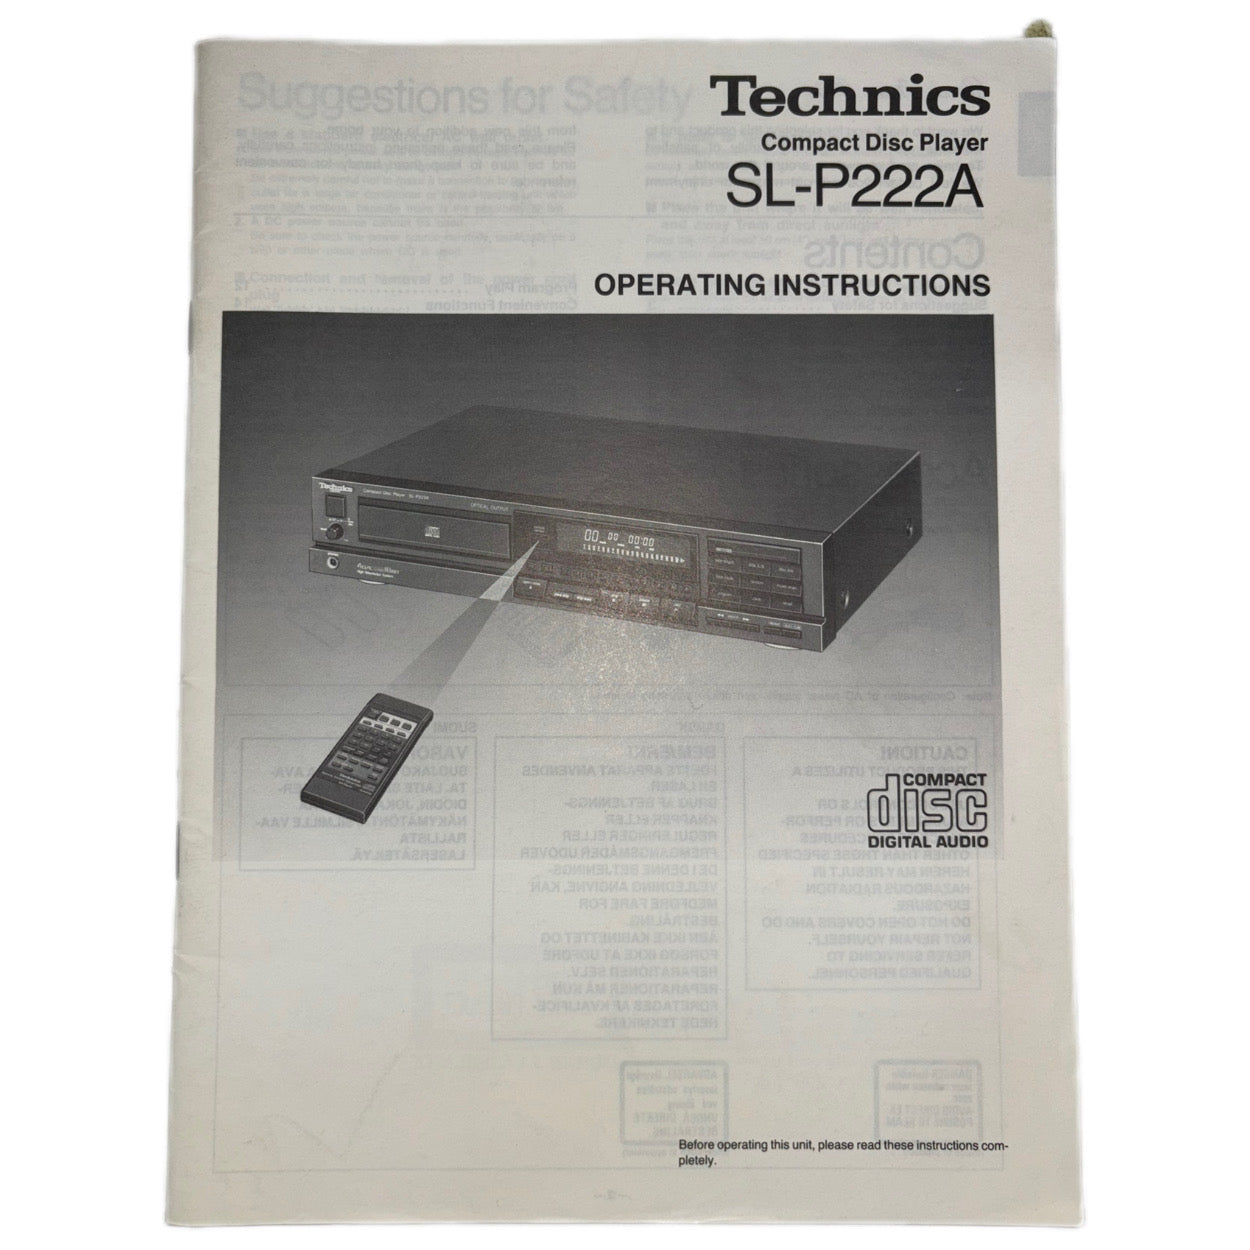 Technics SL-P222A Compact Disc Player User Manual